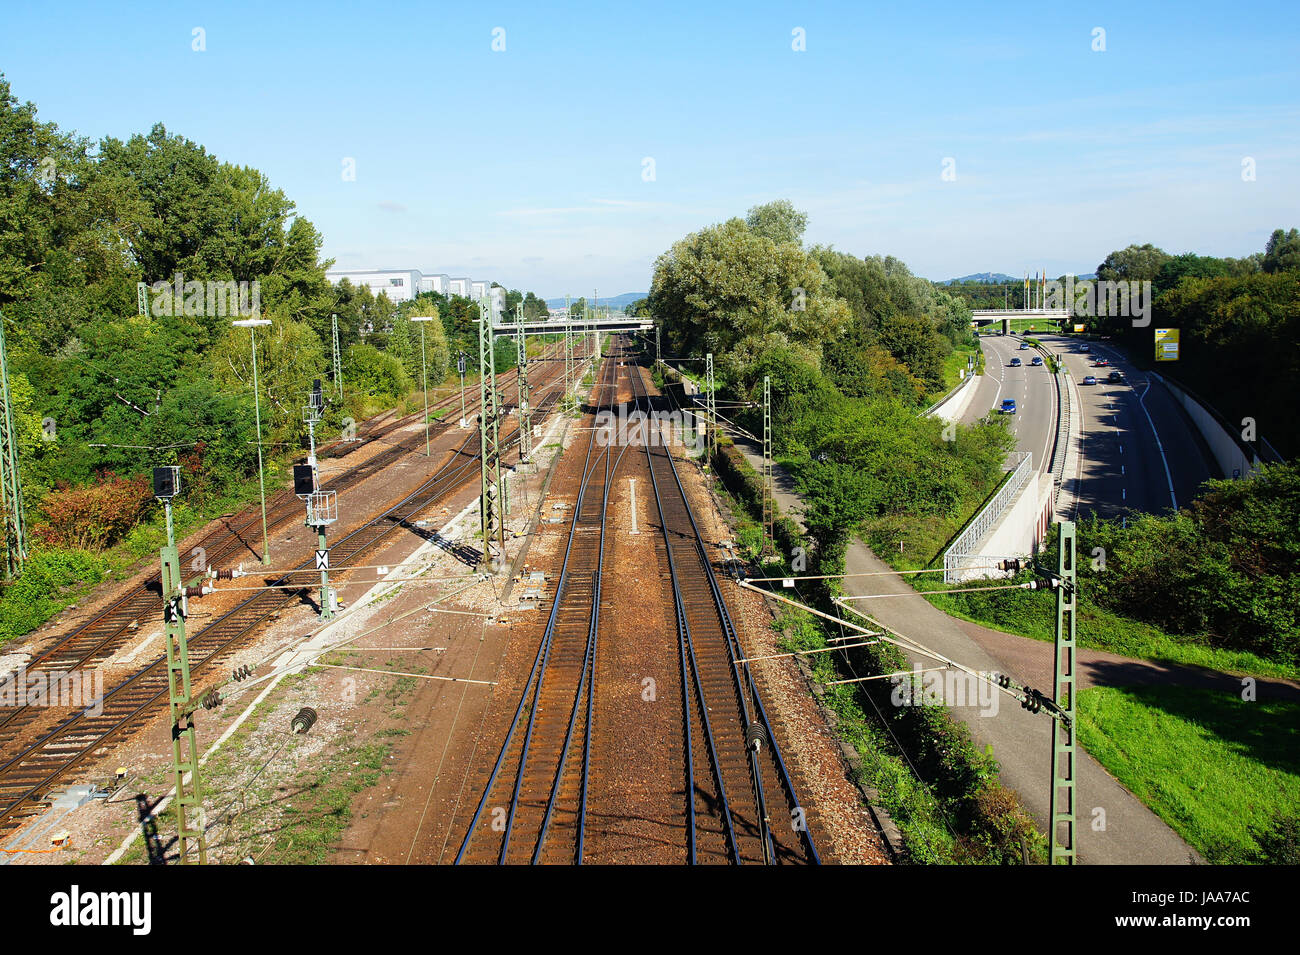 railway, locomotive, train, engine, rolling stock, vehicle, means of travel, Stock Photo